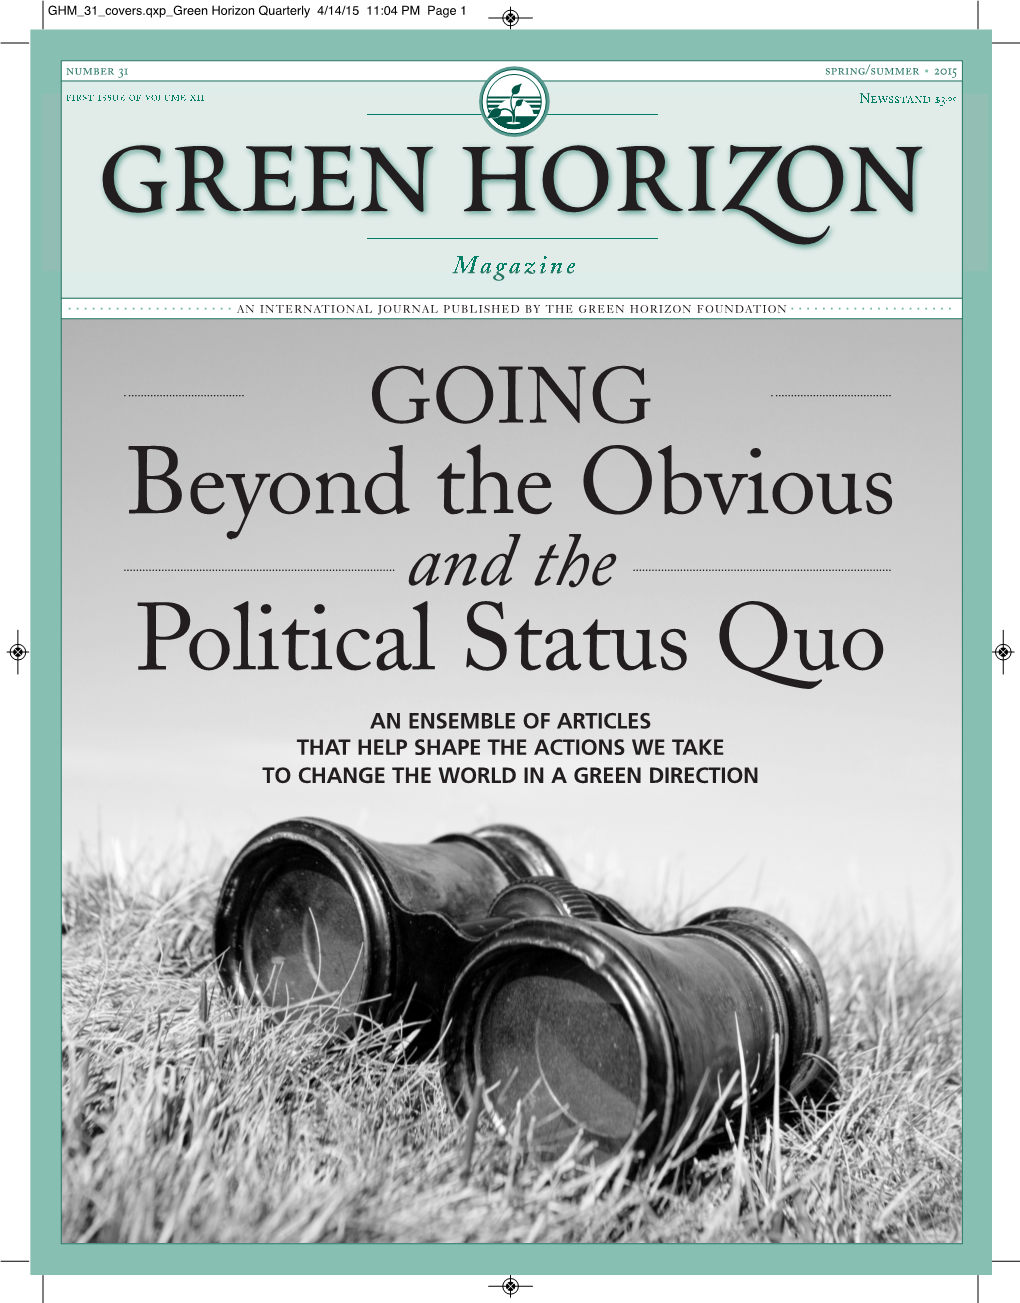 Green Horizon Quarterly 4/14/15 11:04 PM Page 1